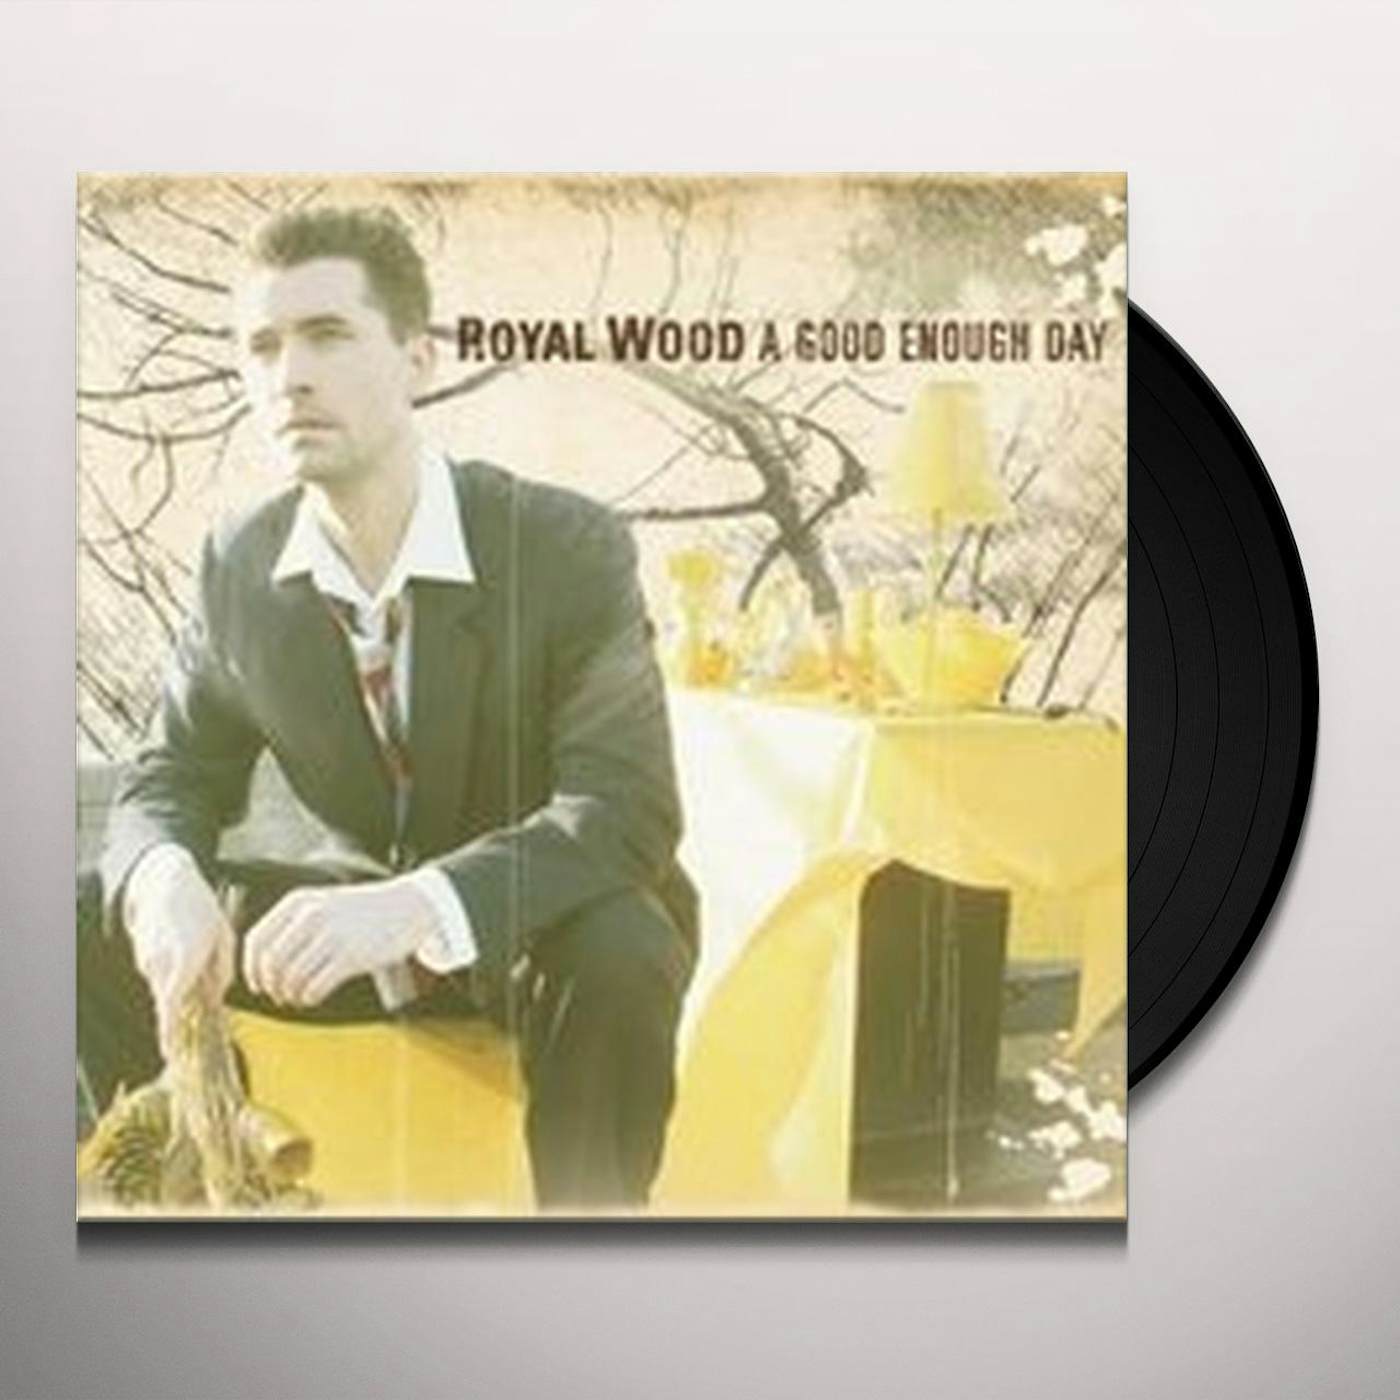 Royal Wood GOOD ENOUGH DAY Vinyl Record